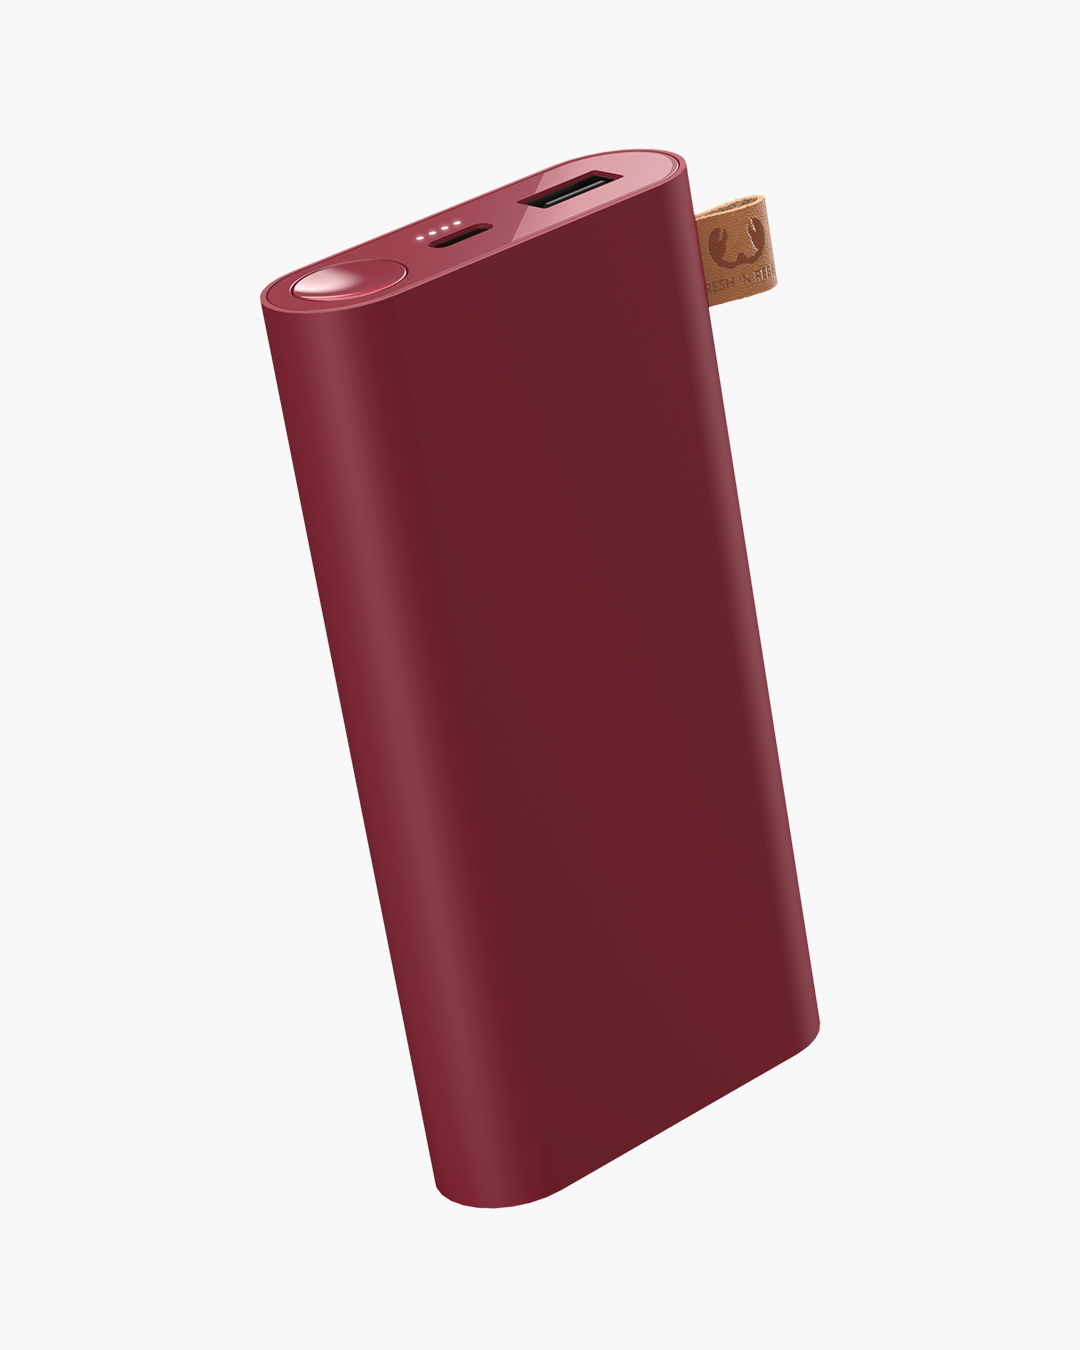 Fresh 'n Rebel - Powerbank 12000 mAh USB-C - Ruby Red